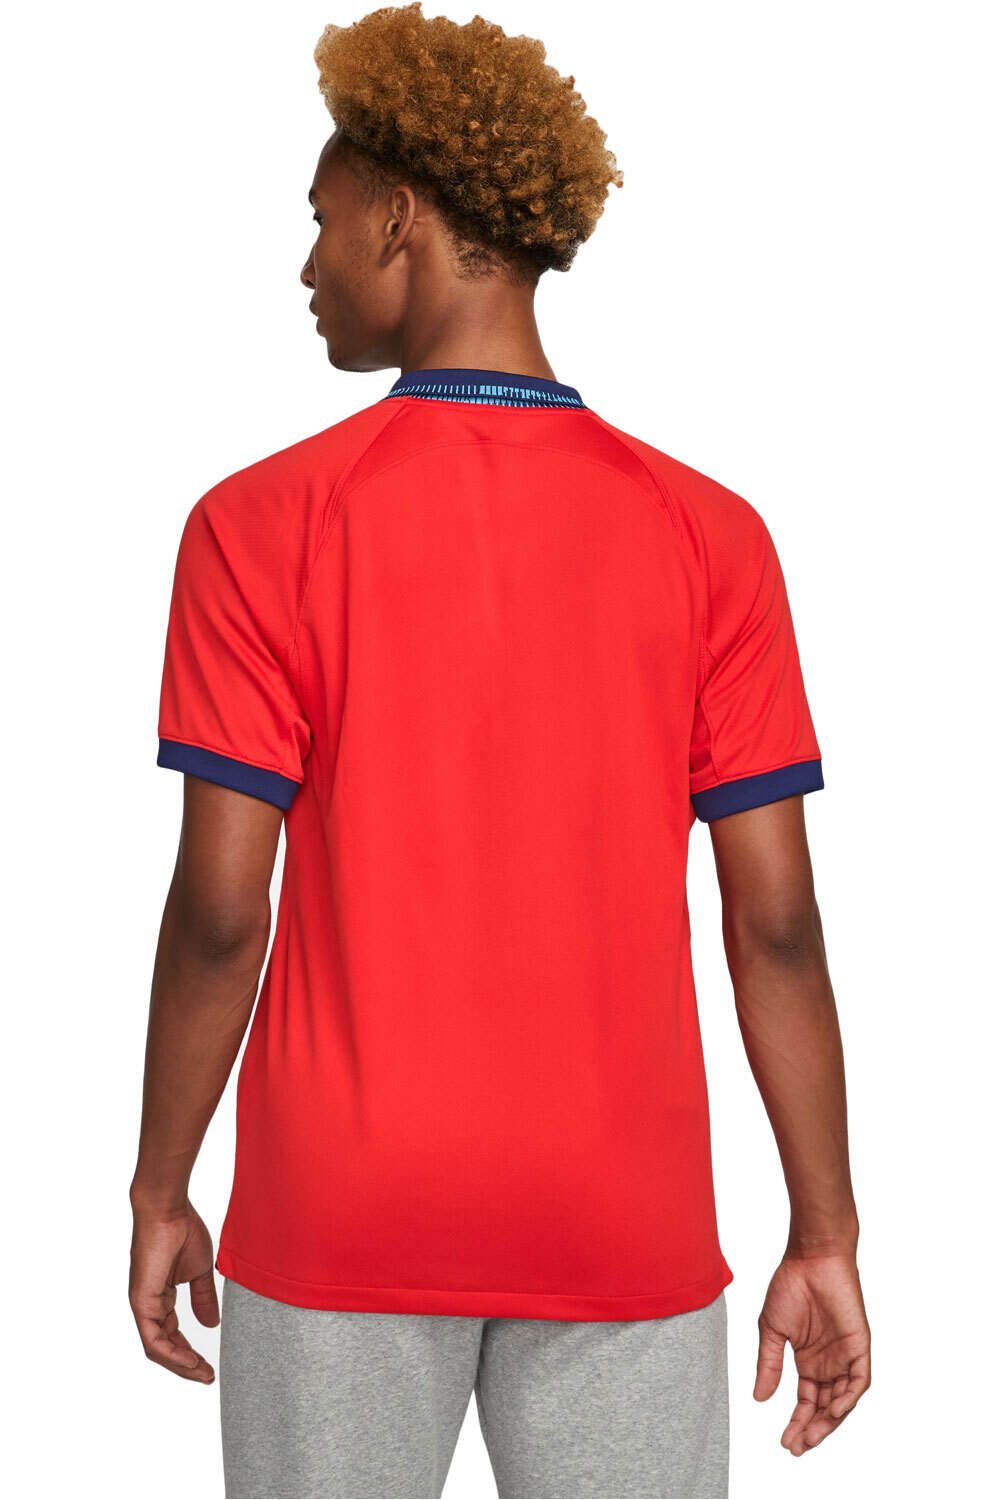 Nike camiseta de fútbol oficiales CAMISETA INGLATERRA SEGUNDA EQUIPACION 2022 vista trasera